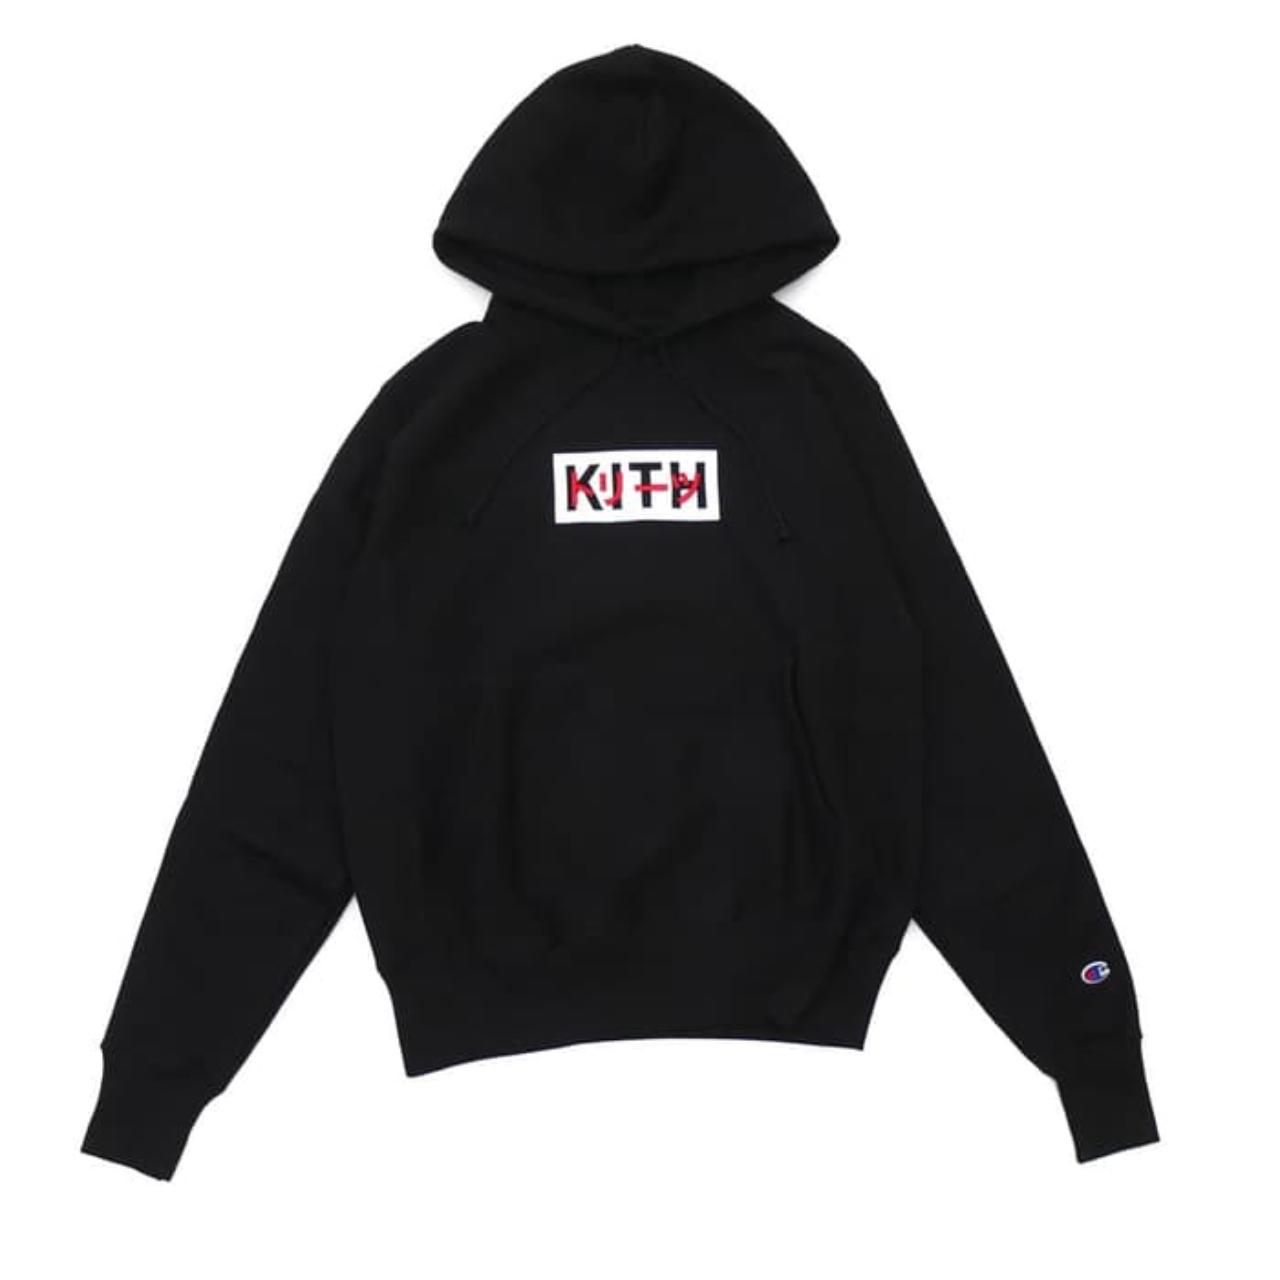 KITH TREATS TOKYO 1st anniversary hoodie black...